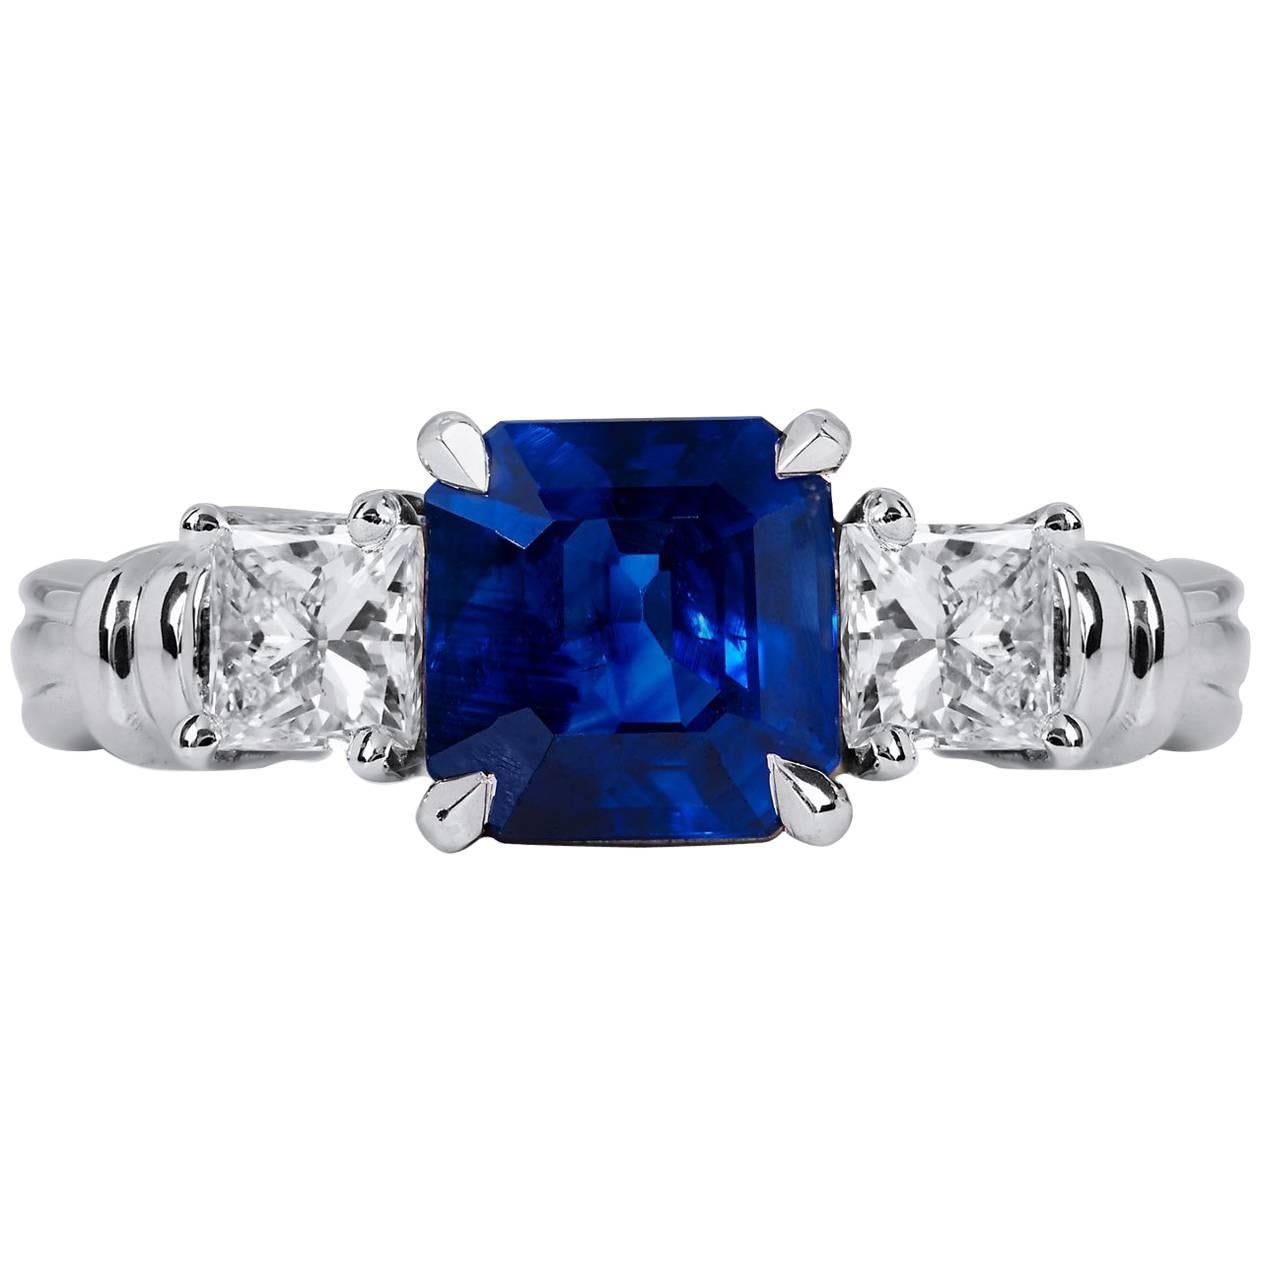 H & H 2.57 Carat Emerald Cut Blue Sapphire and Diamond Ring